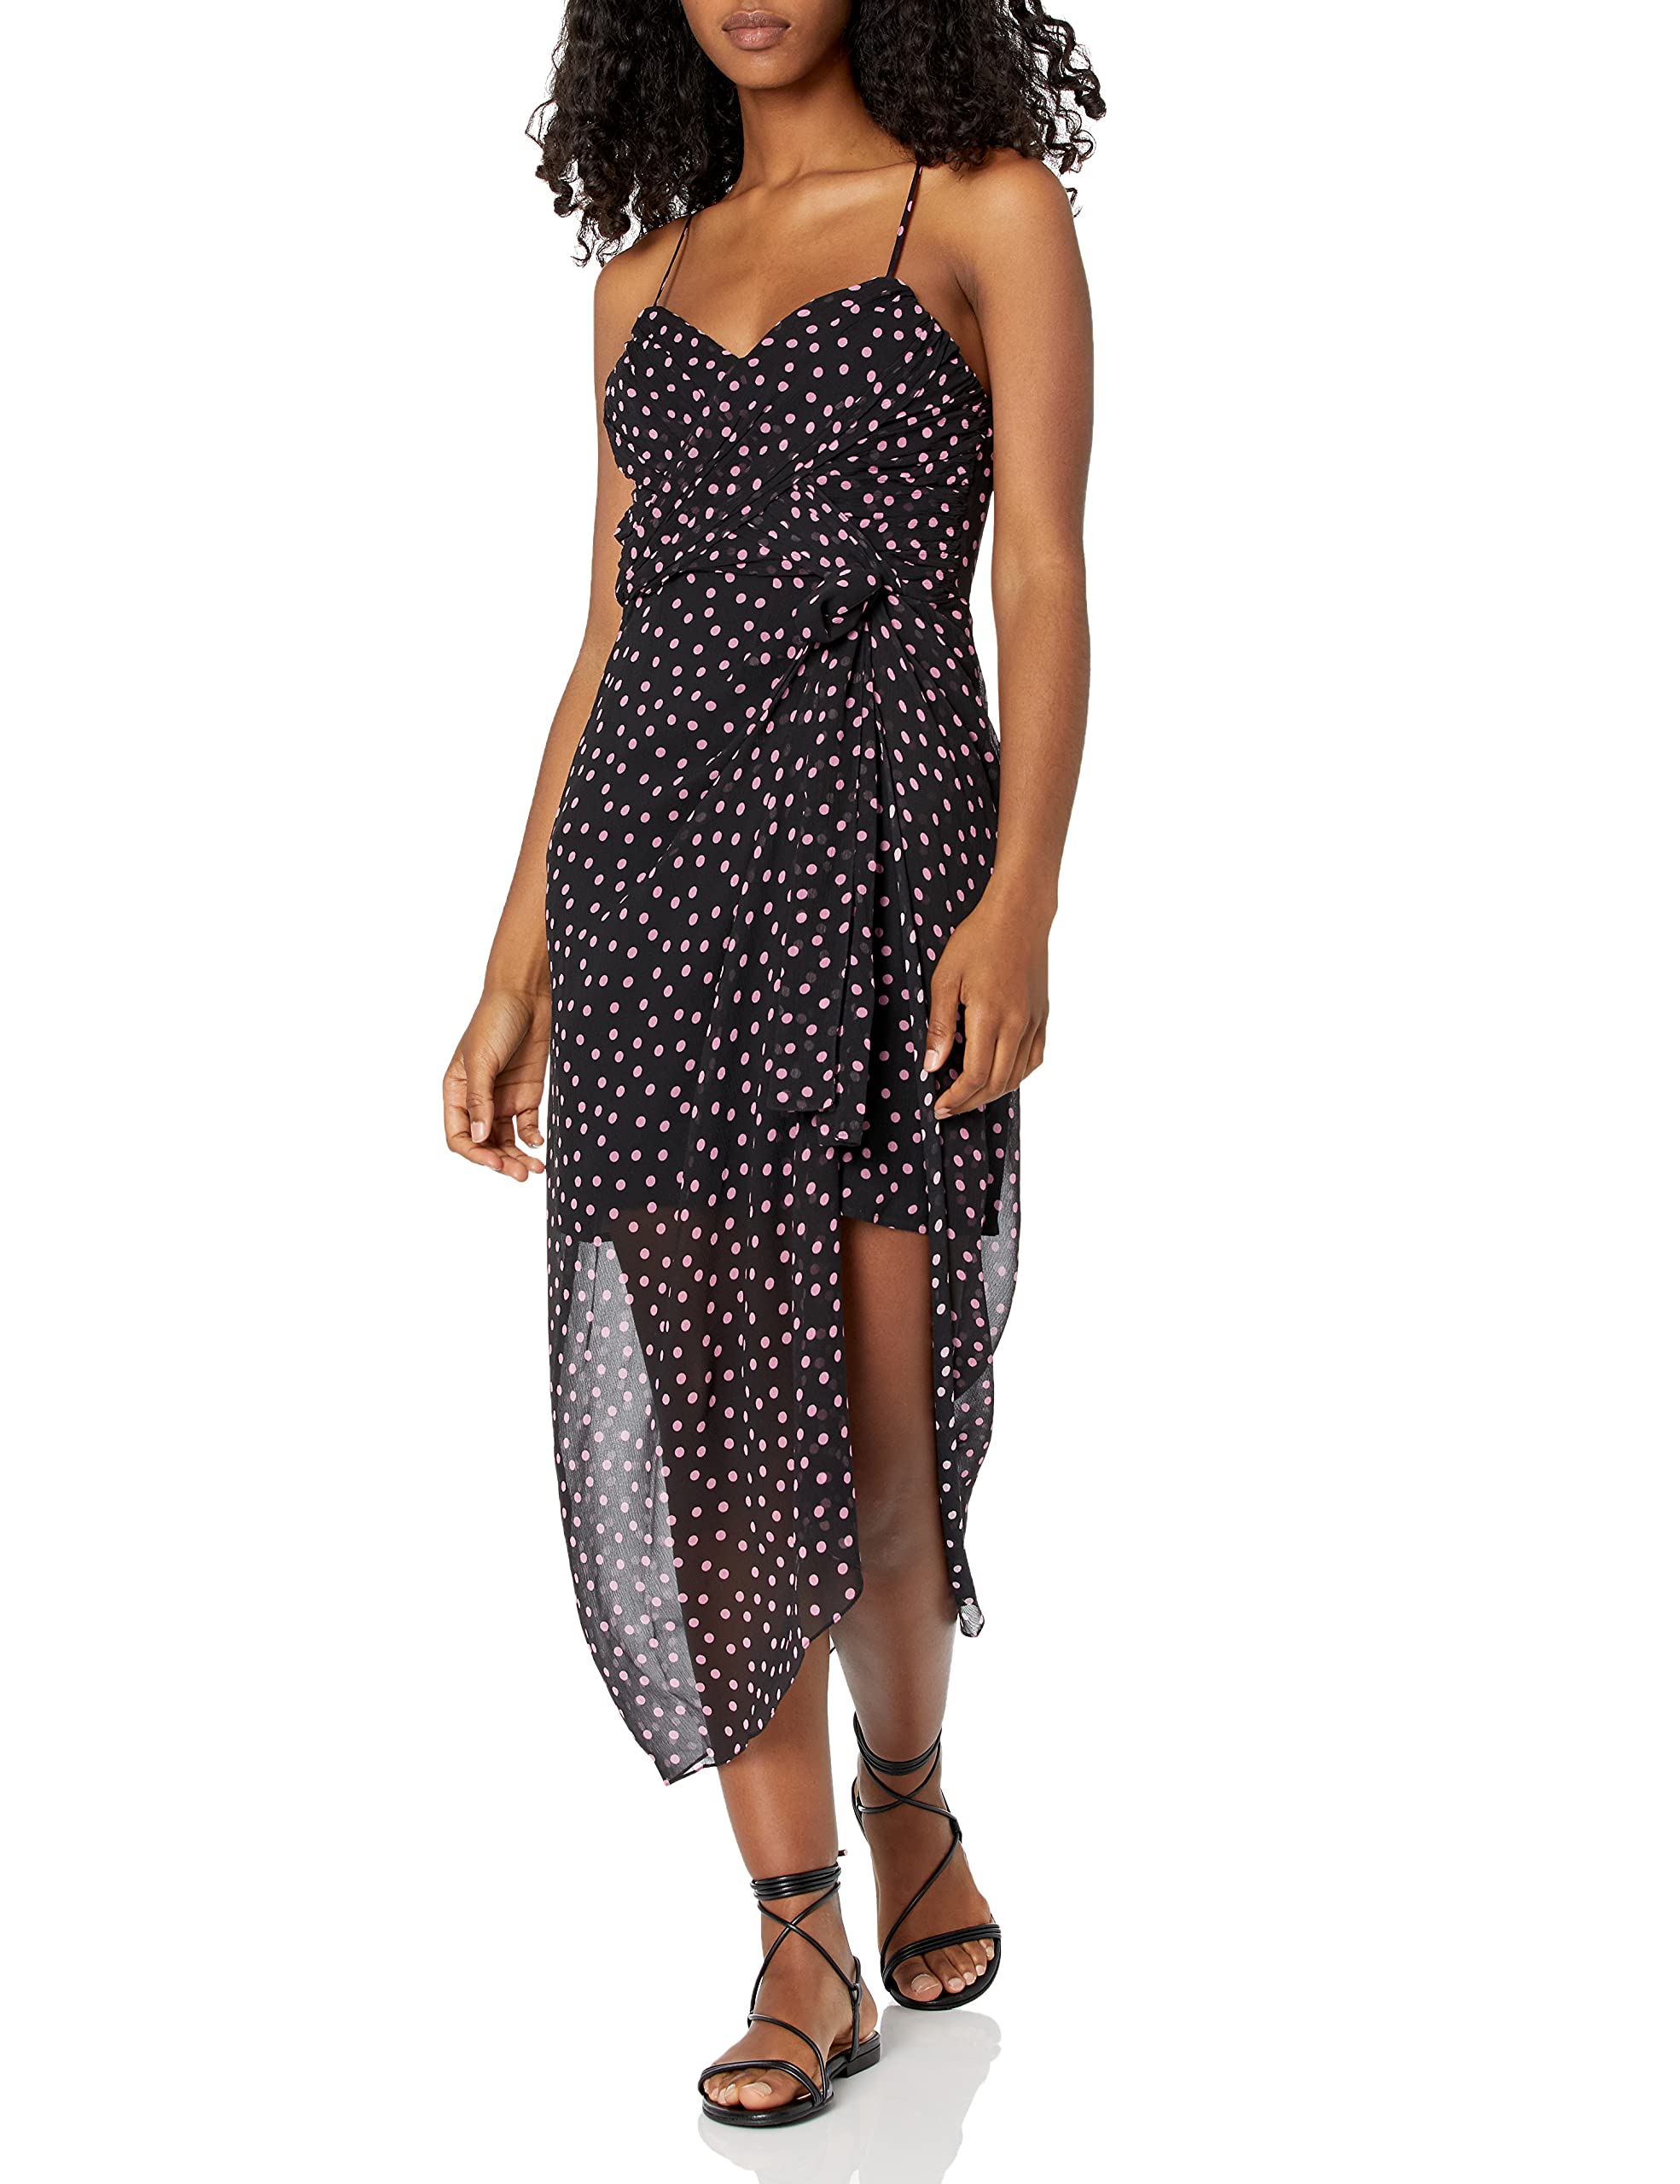 The Kooples Women's Maxi Dress in a Polka Dot Print